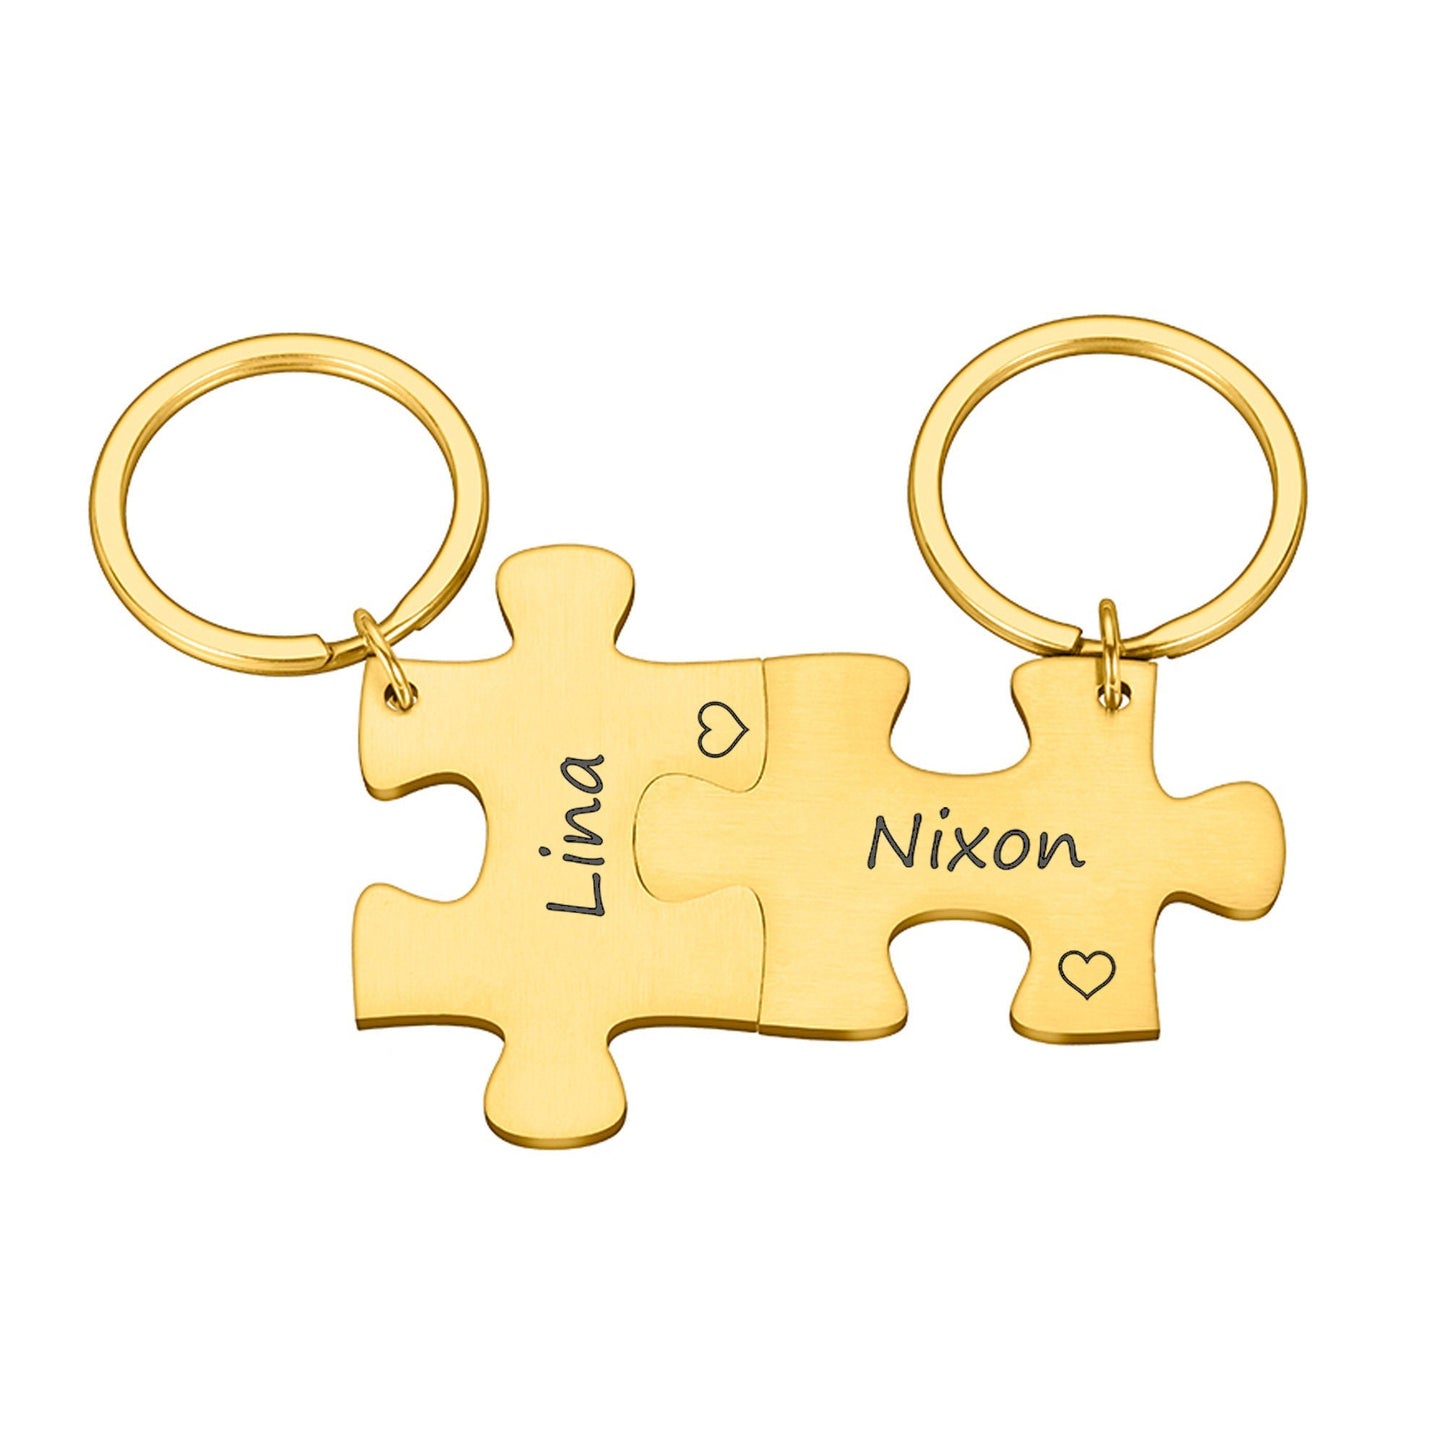 2 x personalised interlocking jigsaw puzzle keyrings gift set | custom initials date | wedding anniversary valentines family gift keychains Heart